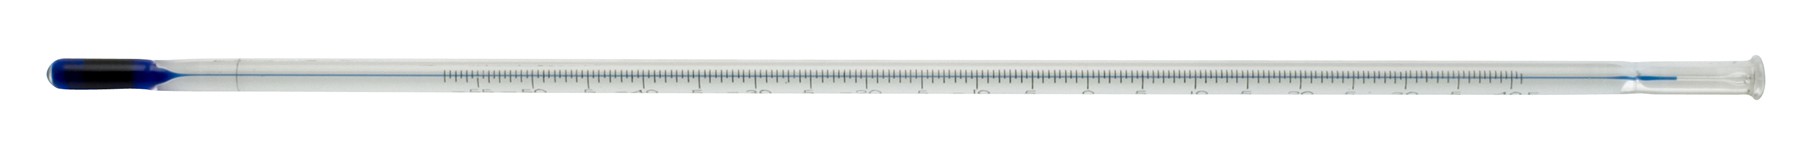 H-B DURAC Plus ASTM Like Liquid-In-Glass Thermometer; 9F / Low-Pensky-Martens, 57mm Immersion, 20 to 230F, Organic Liquid Fill